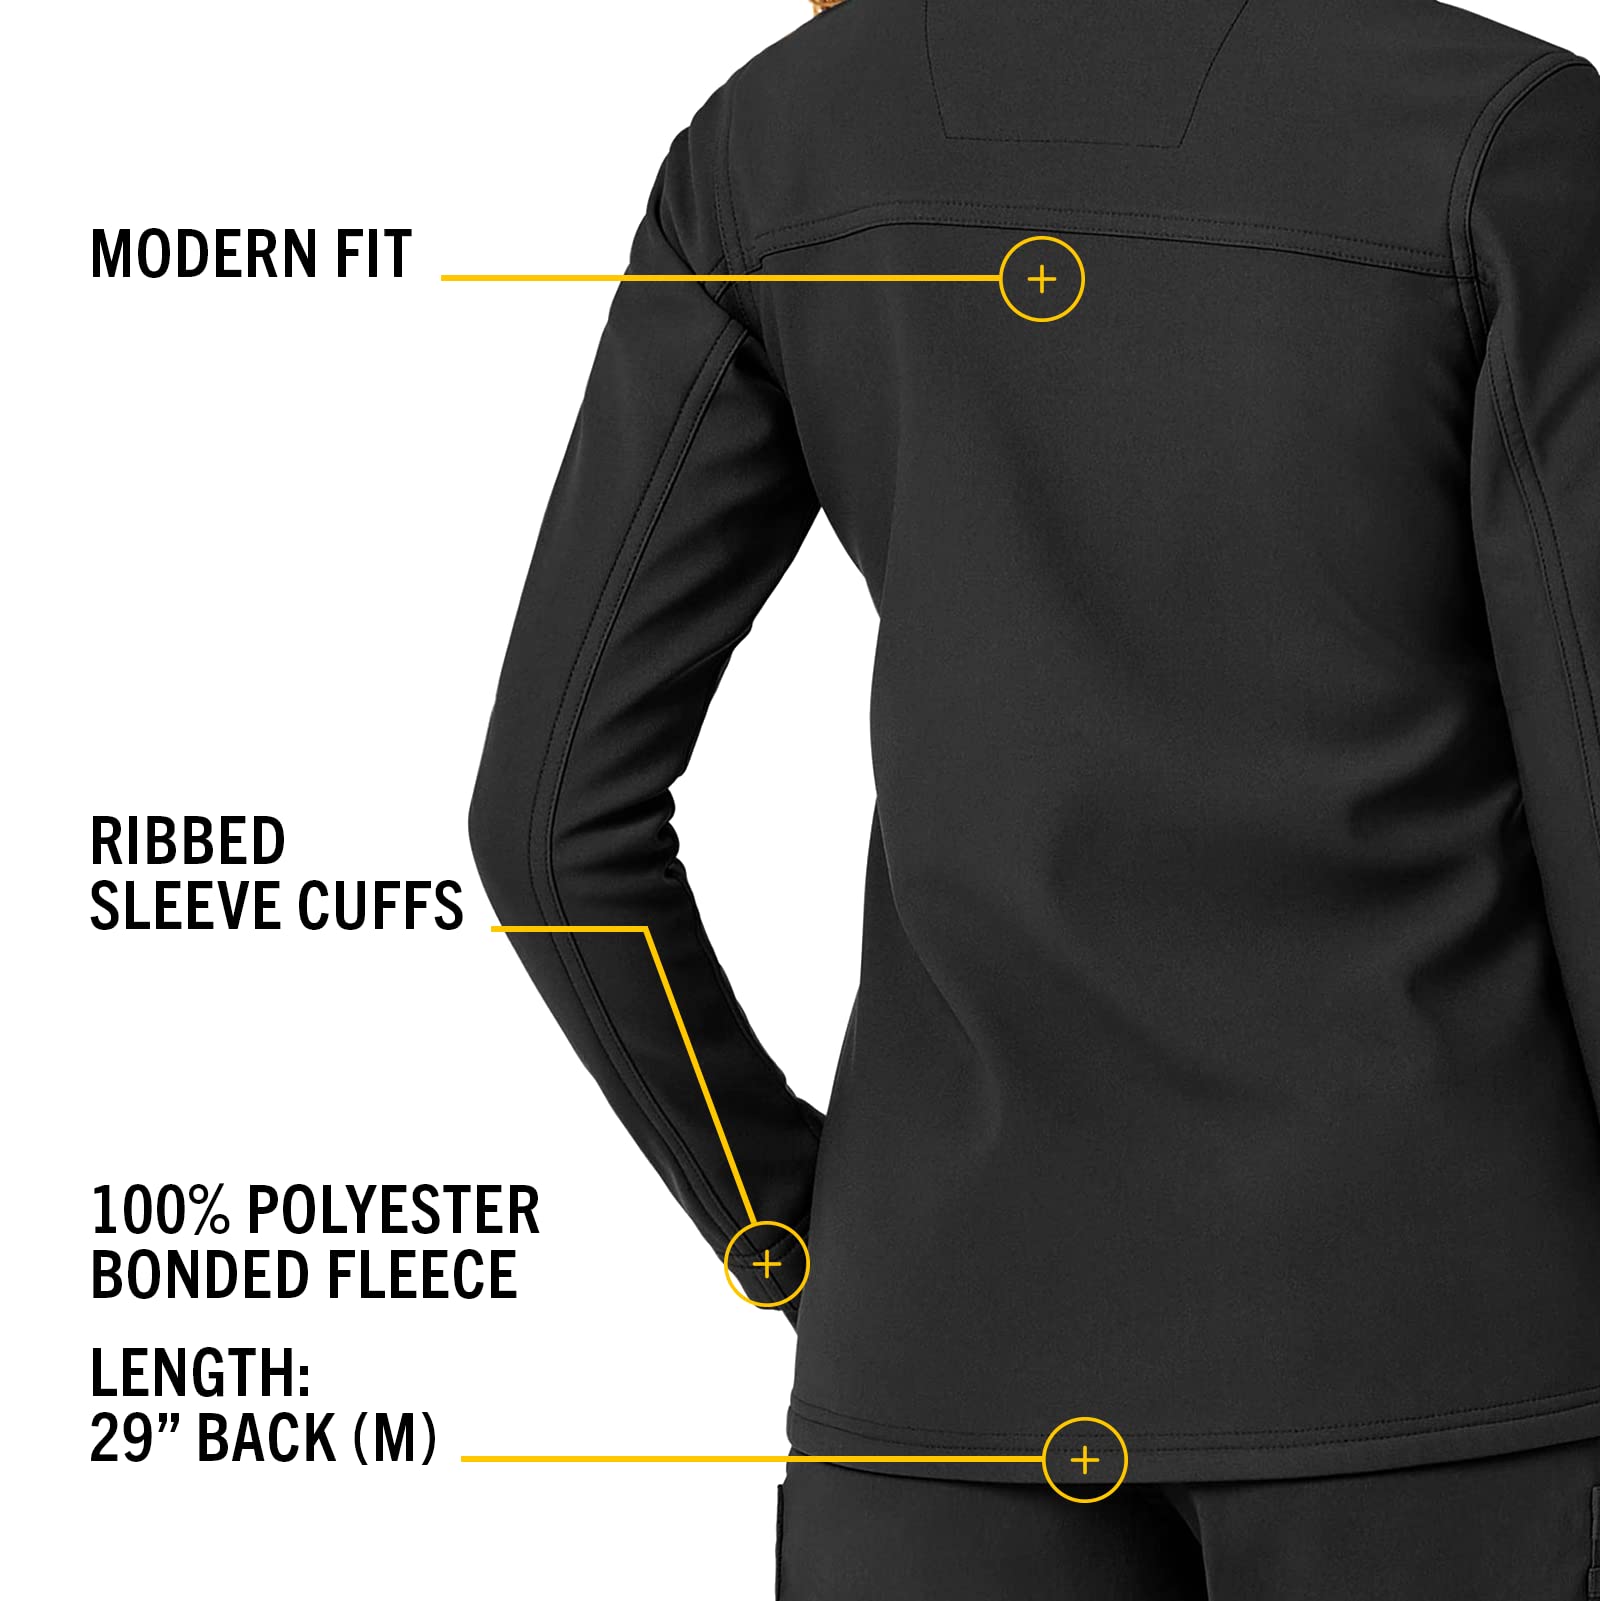 Carhartt Women's Rugged Flex Modern Fit Fluid Resistant Bonded Fleece Jacket